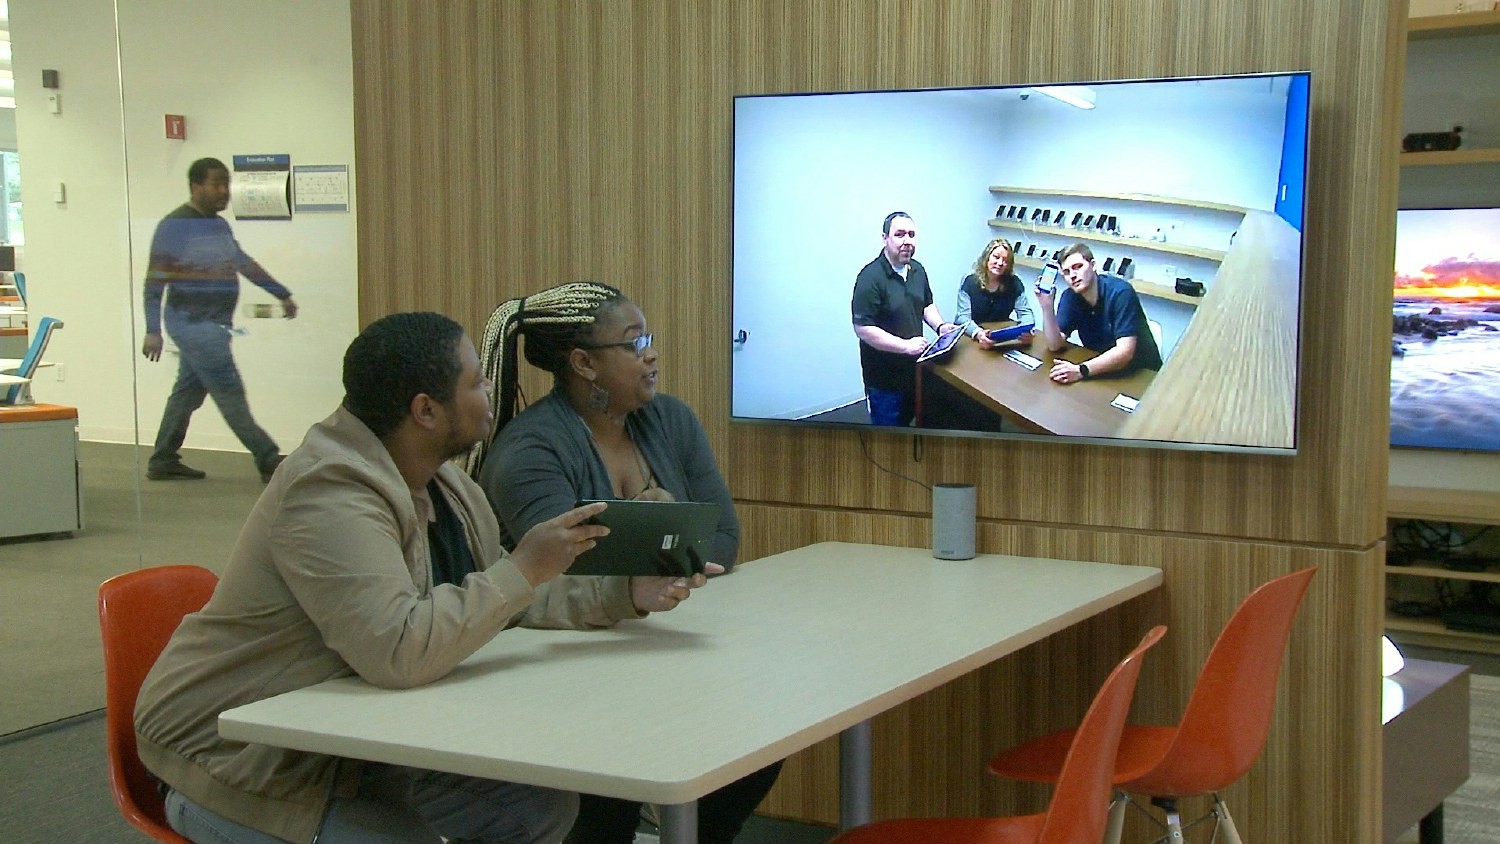 Tech Center employees using technology to communicate